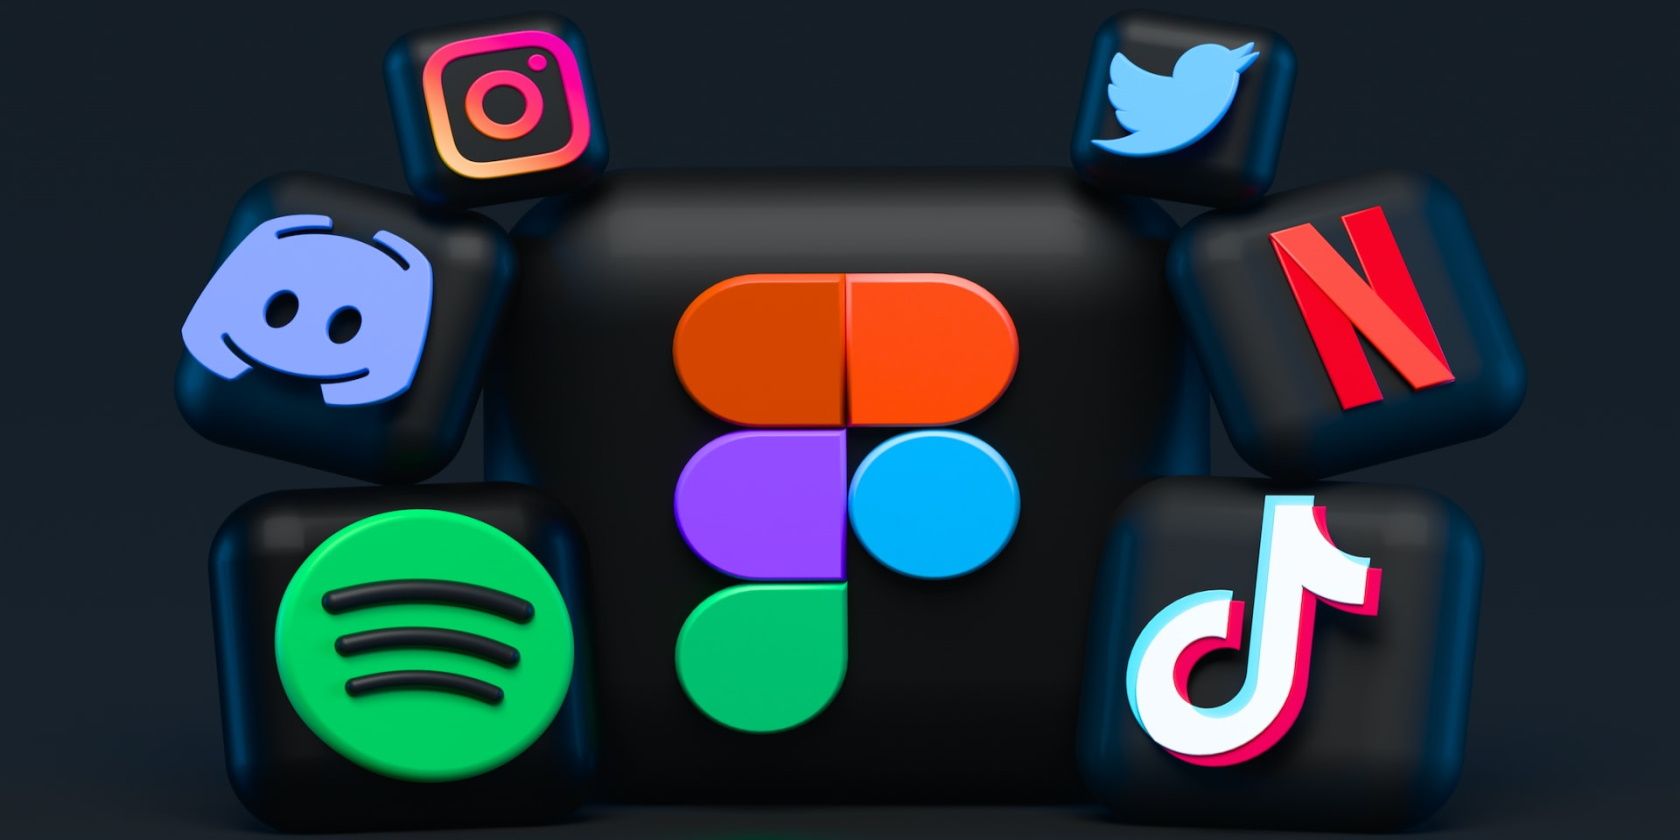 Some social media app icons